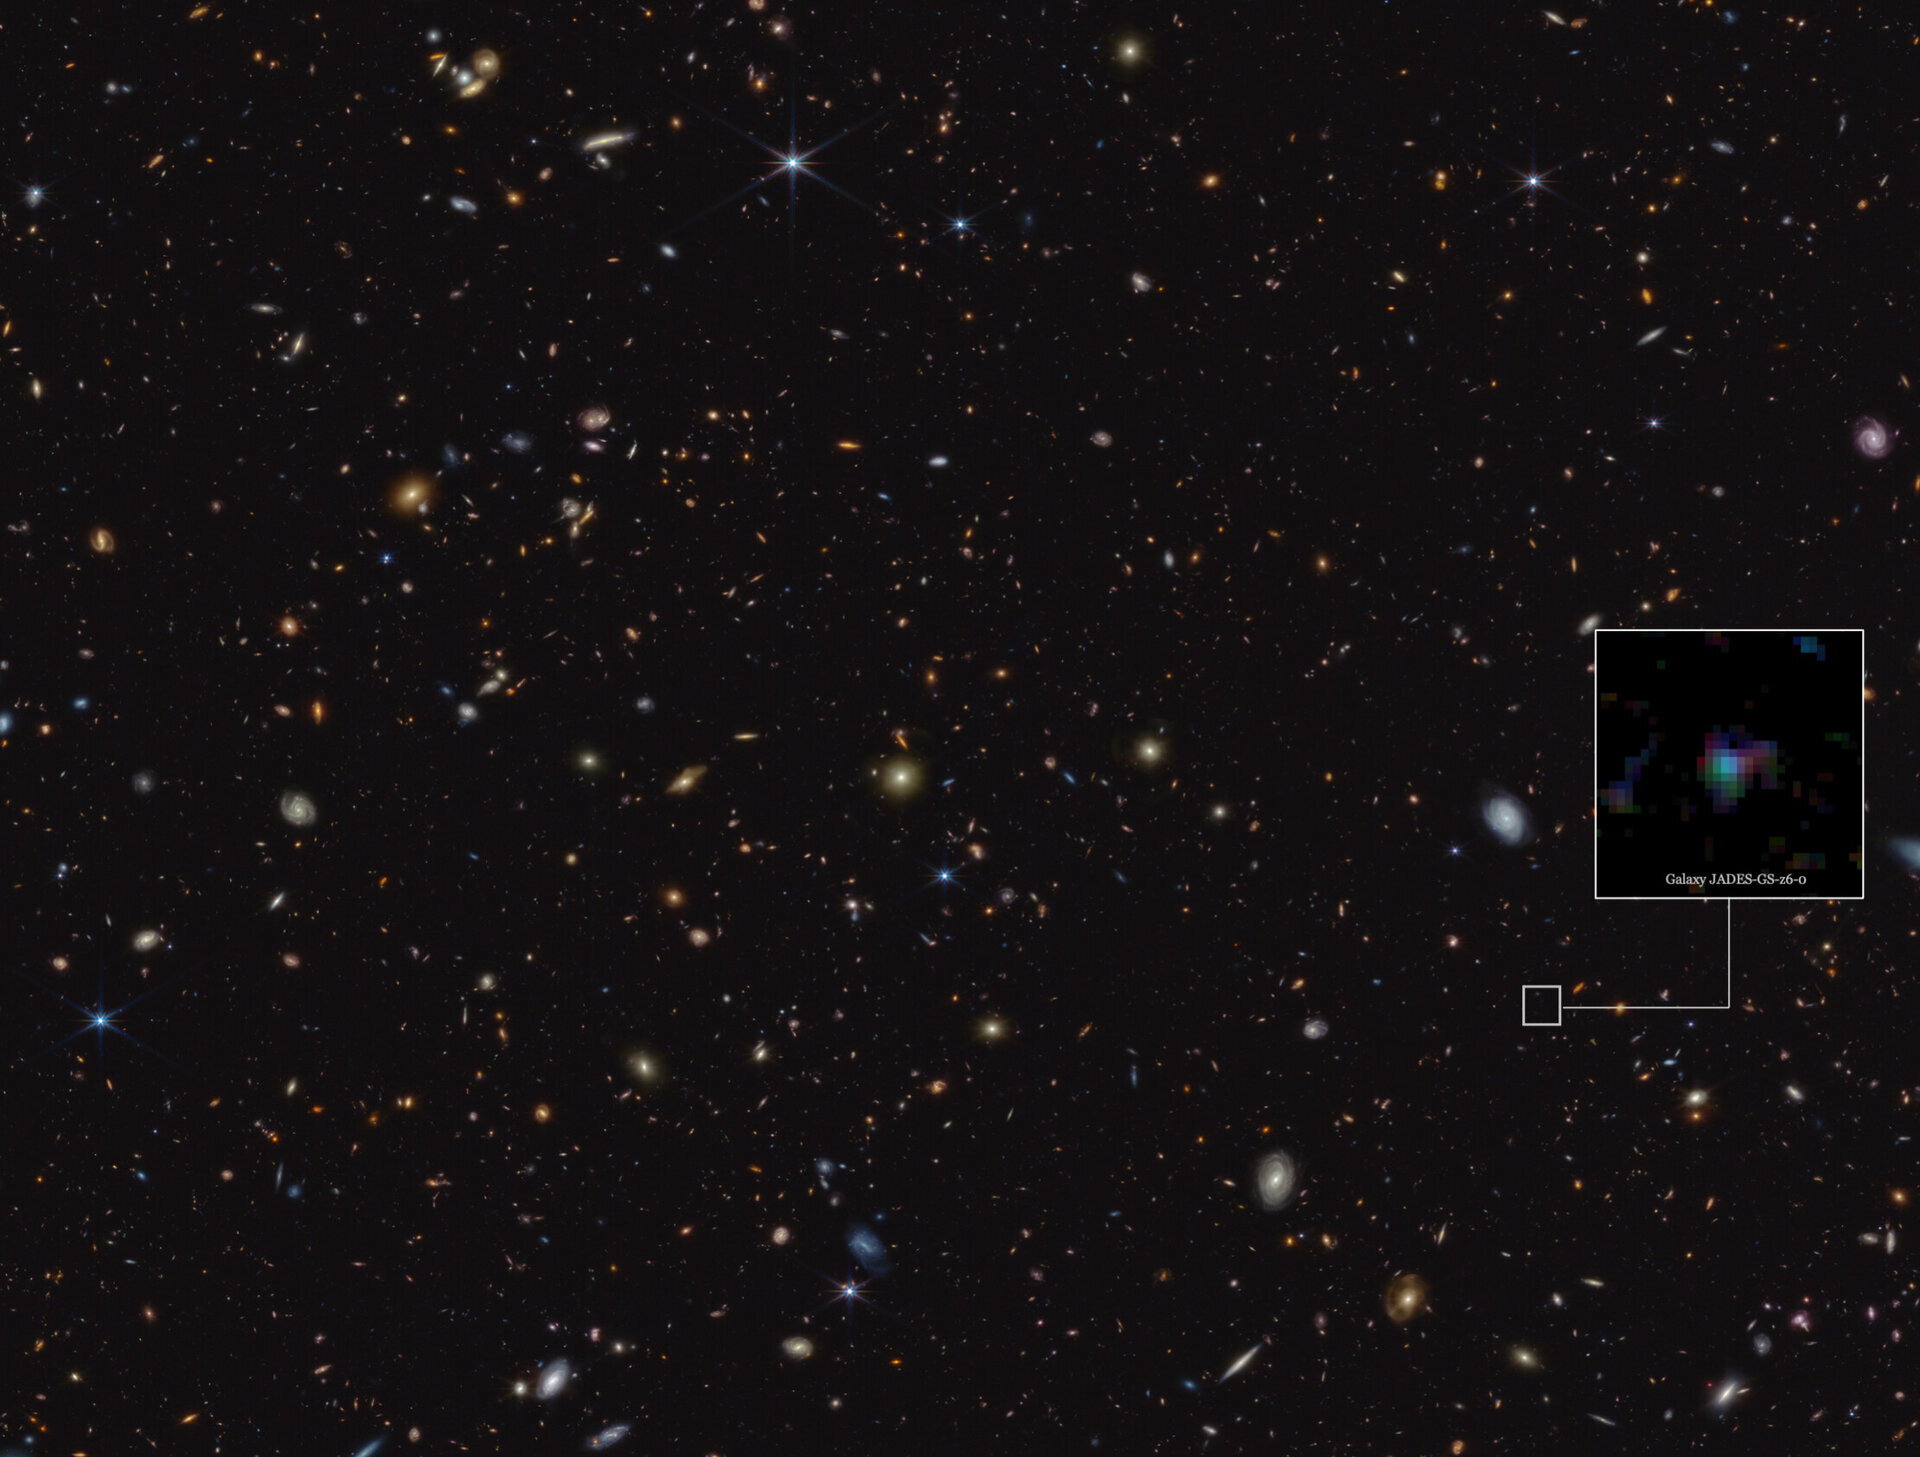 galaxy-jades-gs-z6-in-the-goods-s-field-jades-nircam-image-pillars